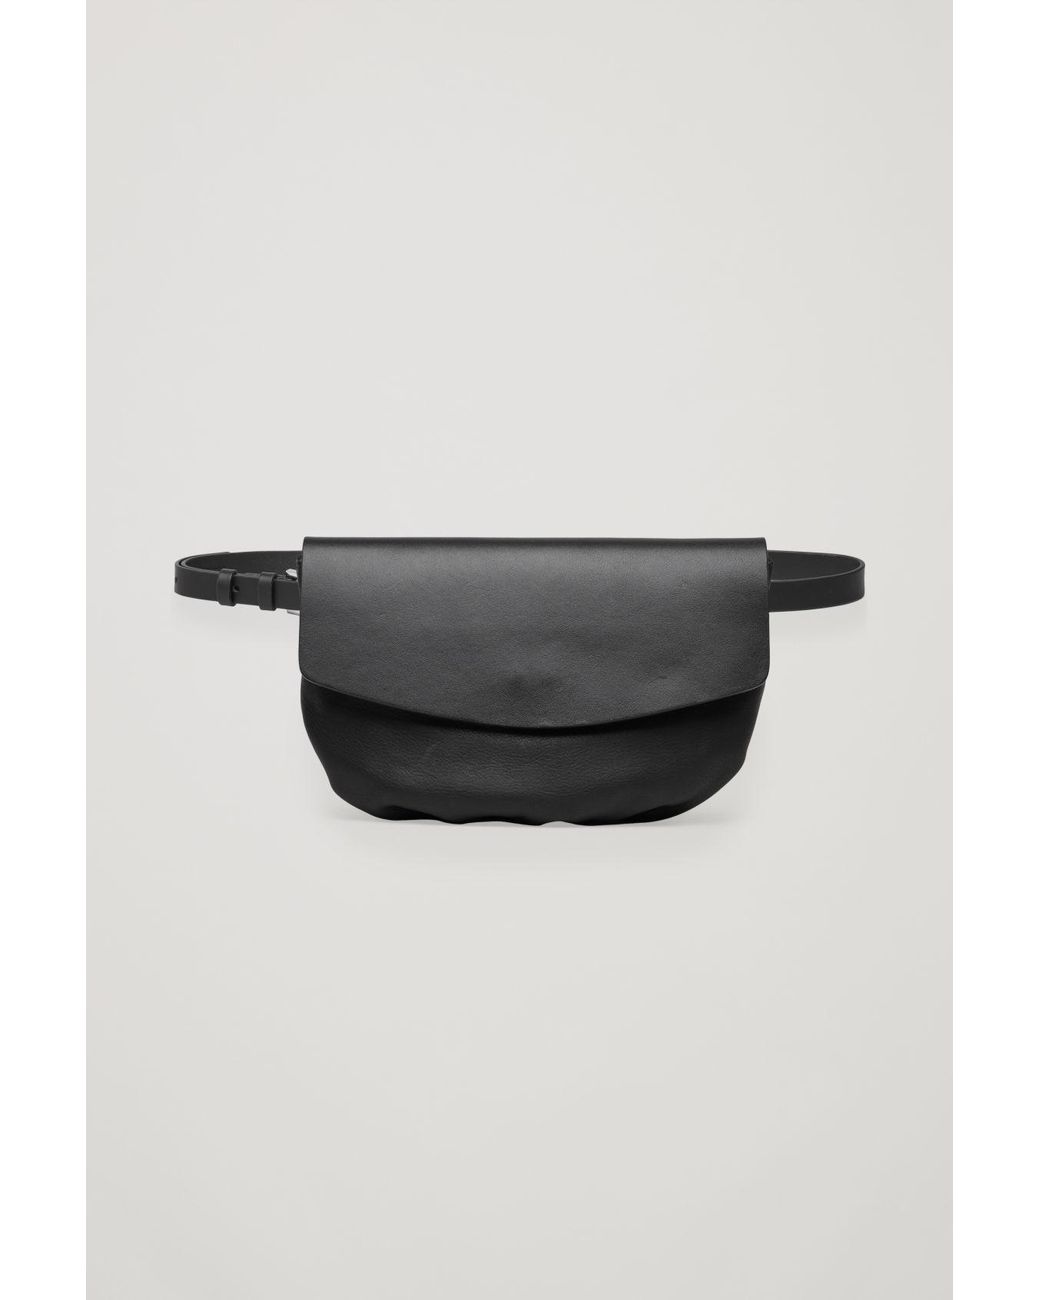 COS Leather Belt Bag in Black | Lyst